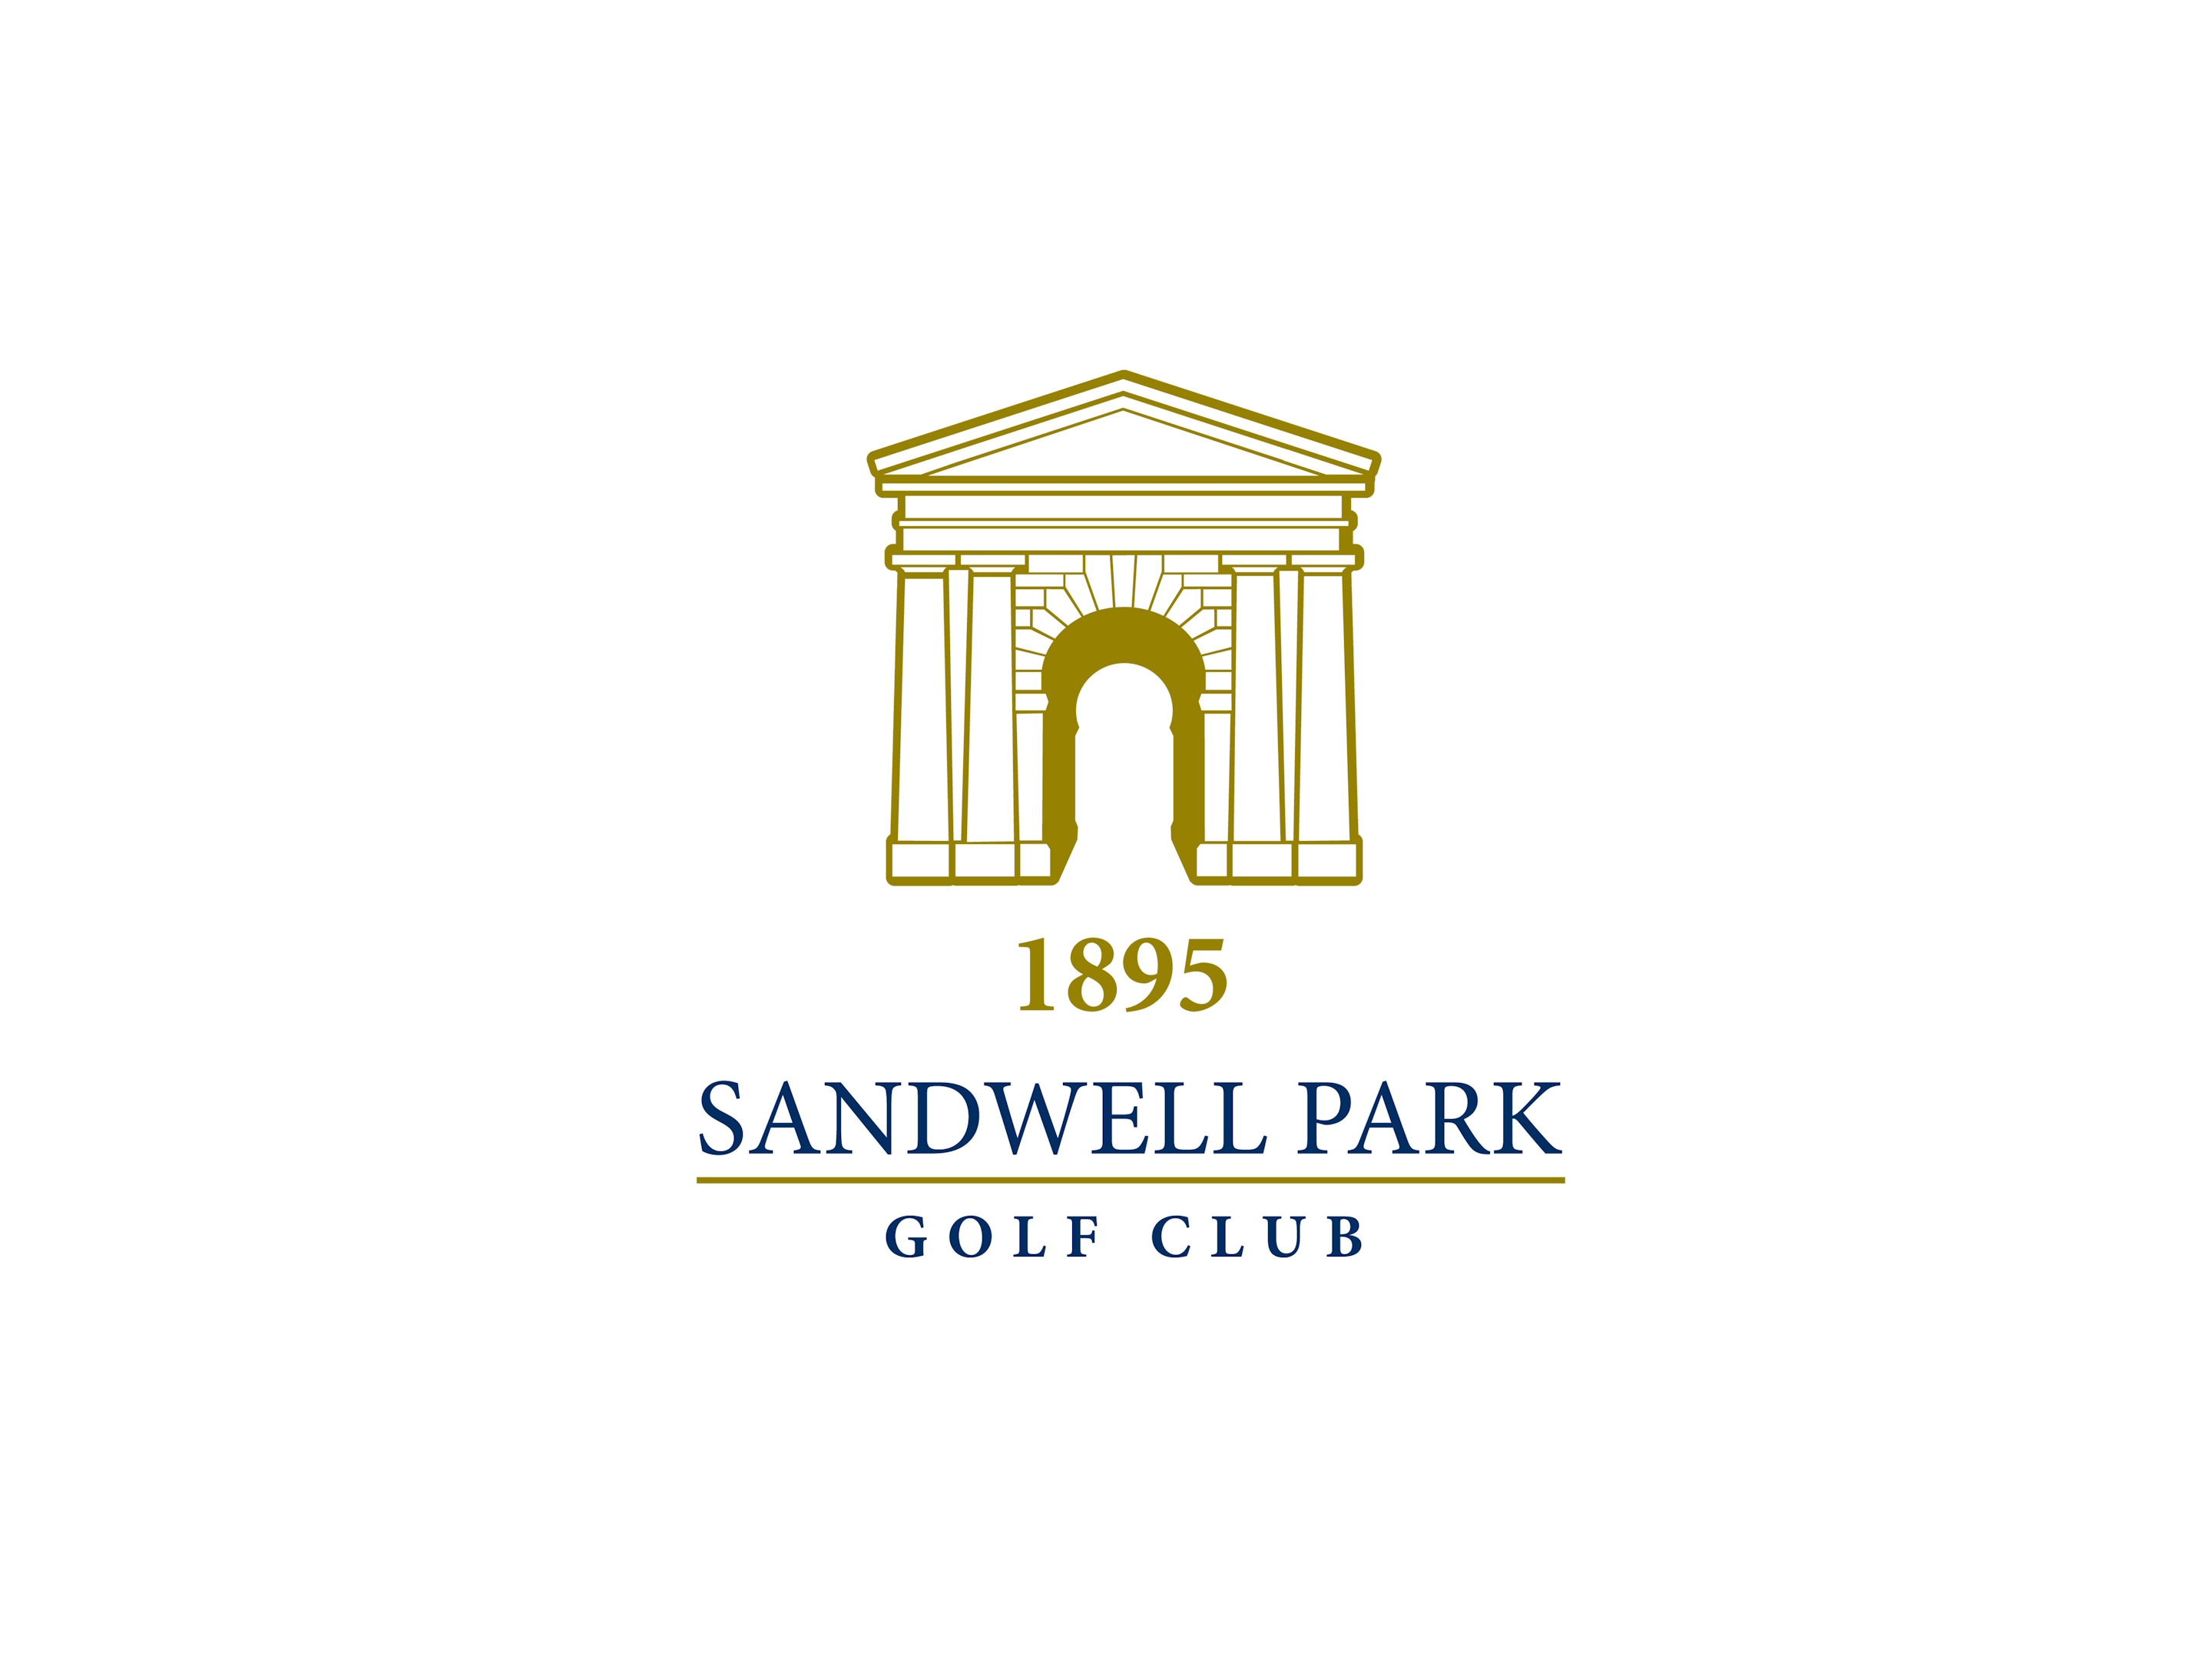 Sandwell Park Golf Club logo